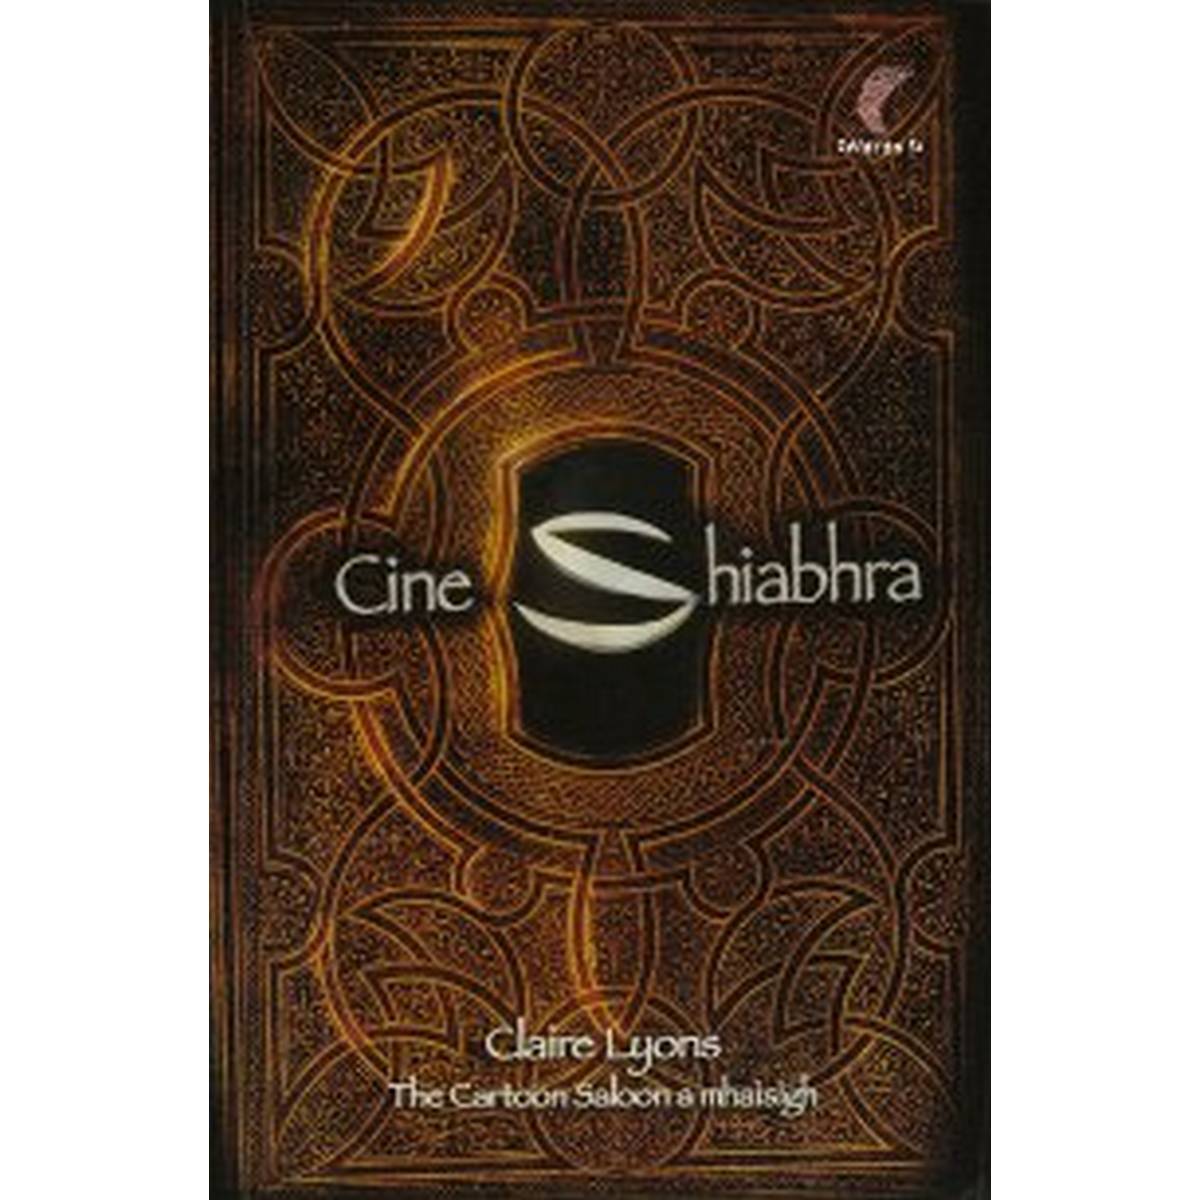 Cine Shiabhra